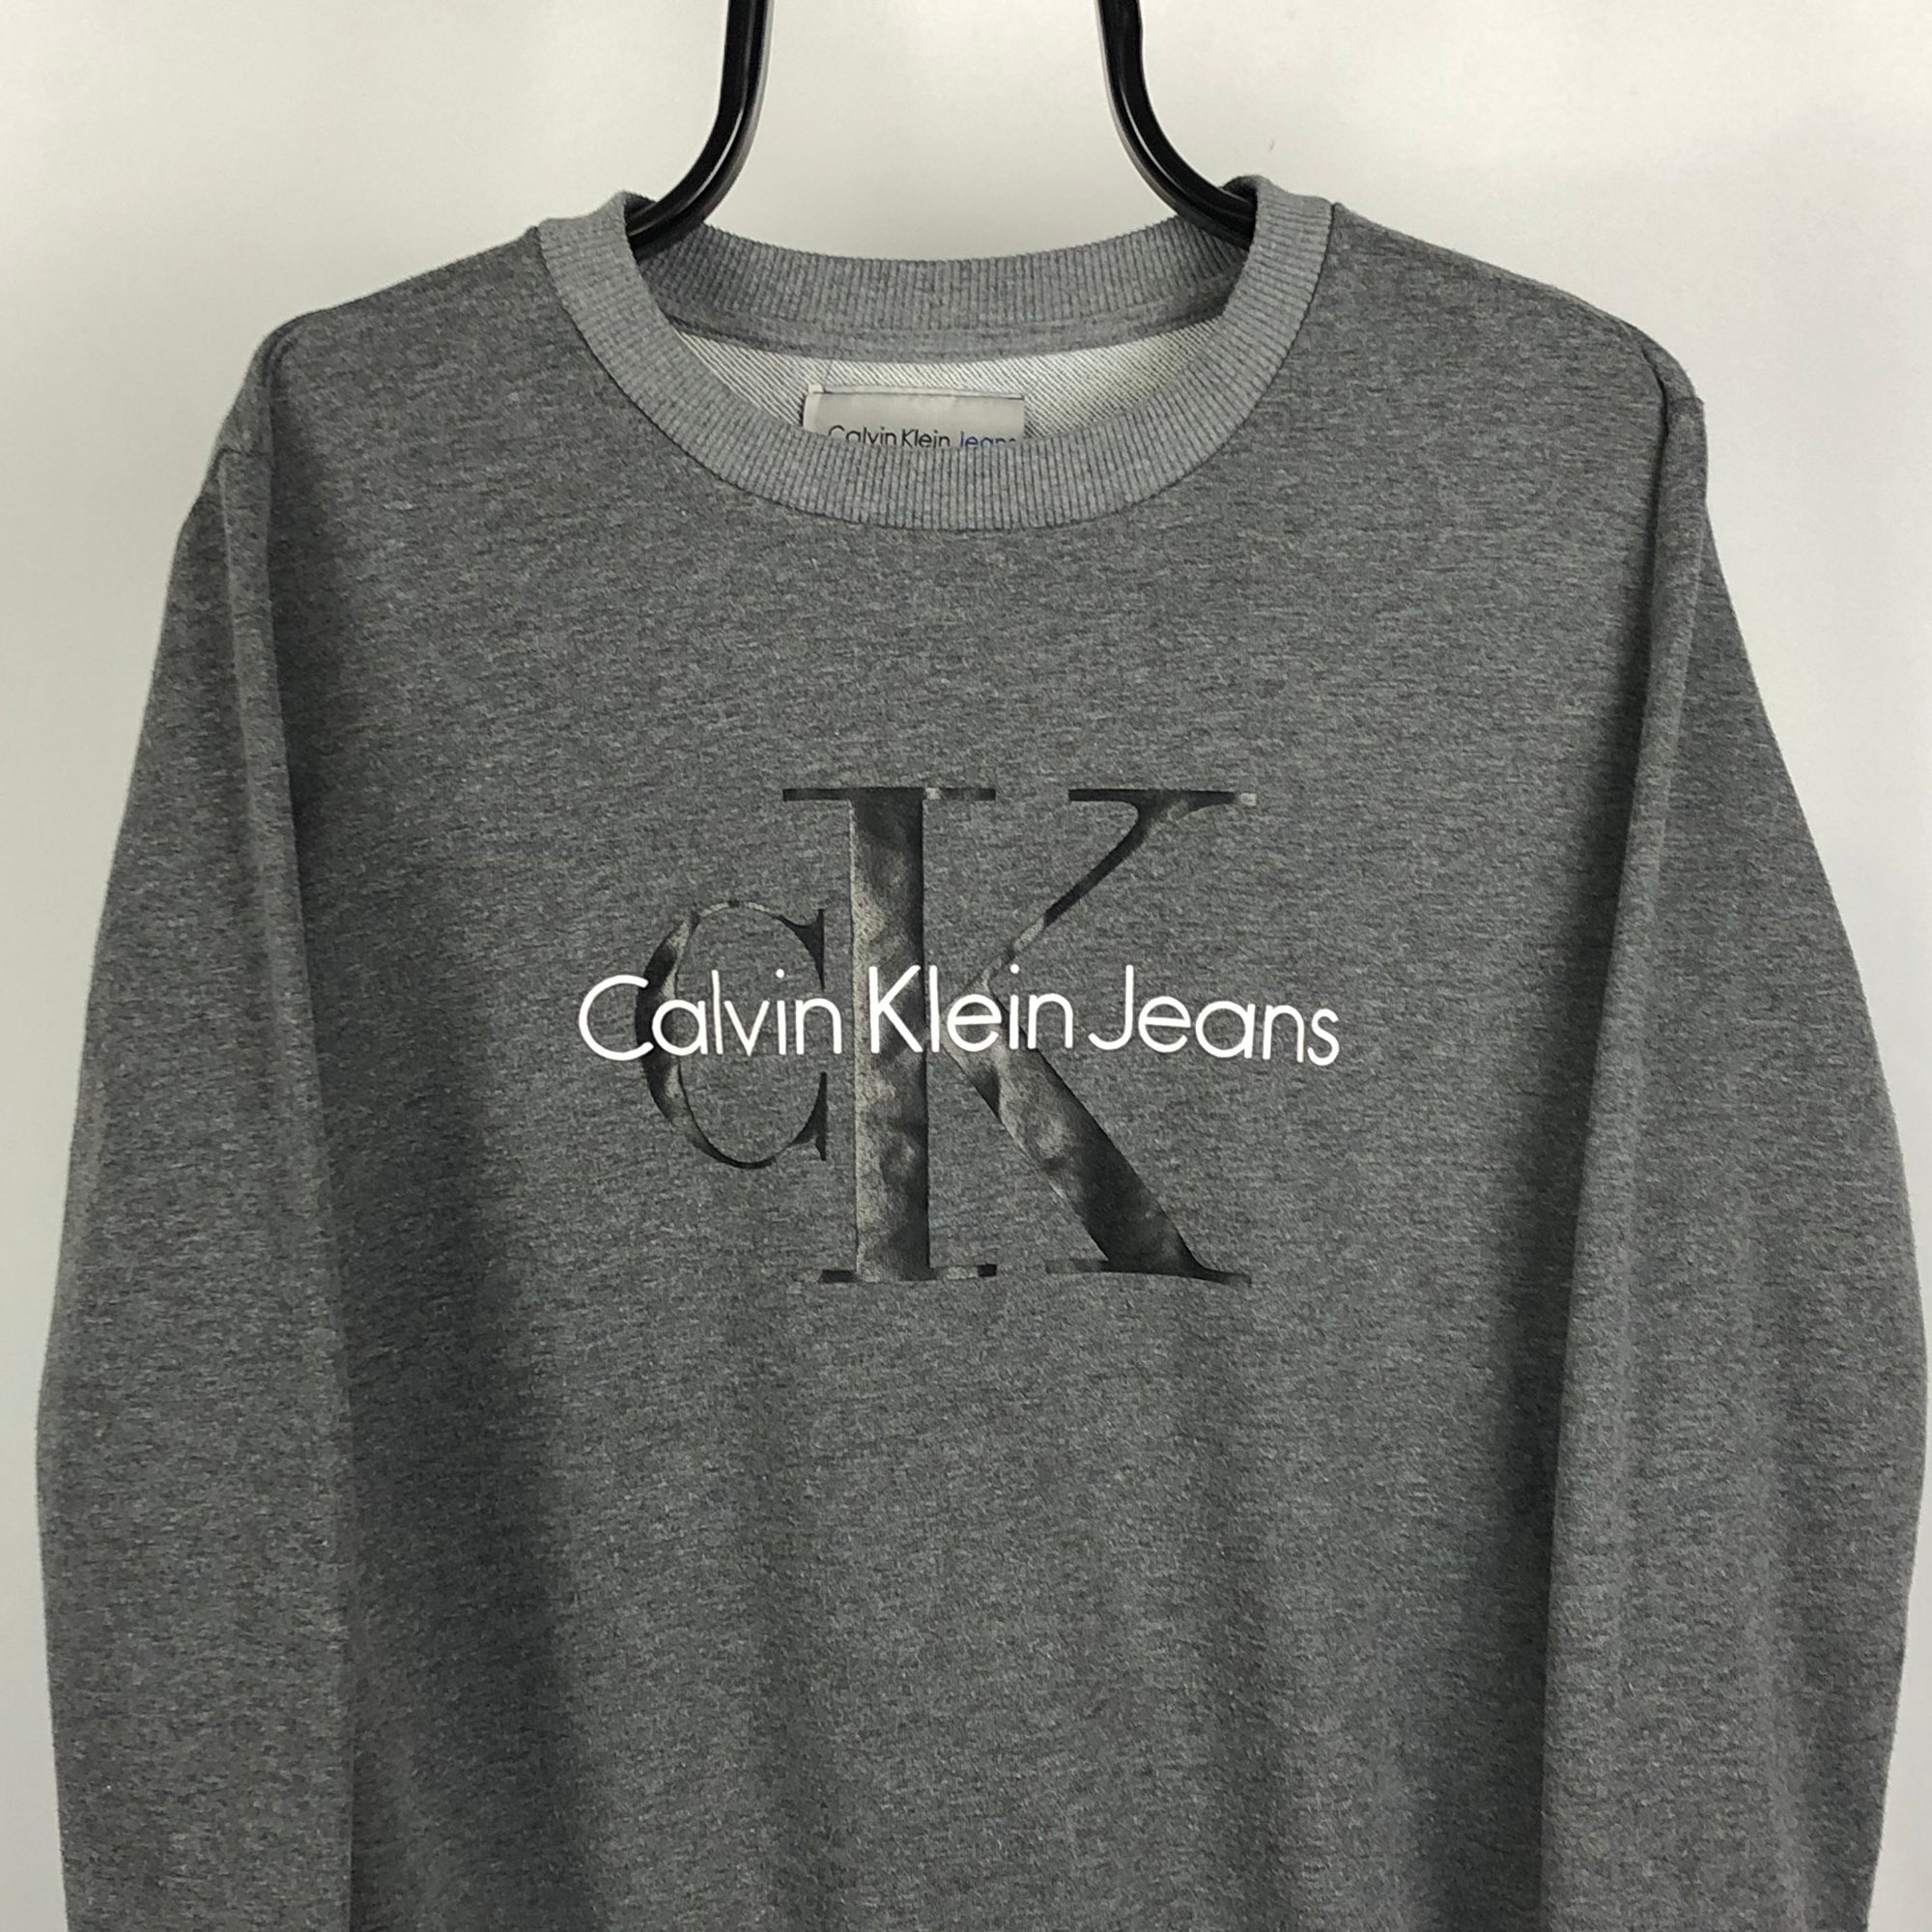 Calvin Klein Jeans Sweatshirt in Grey - Men's Small/Women's Medium